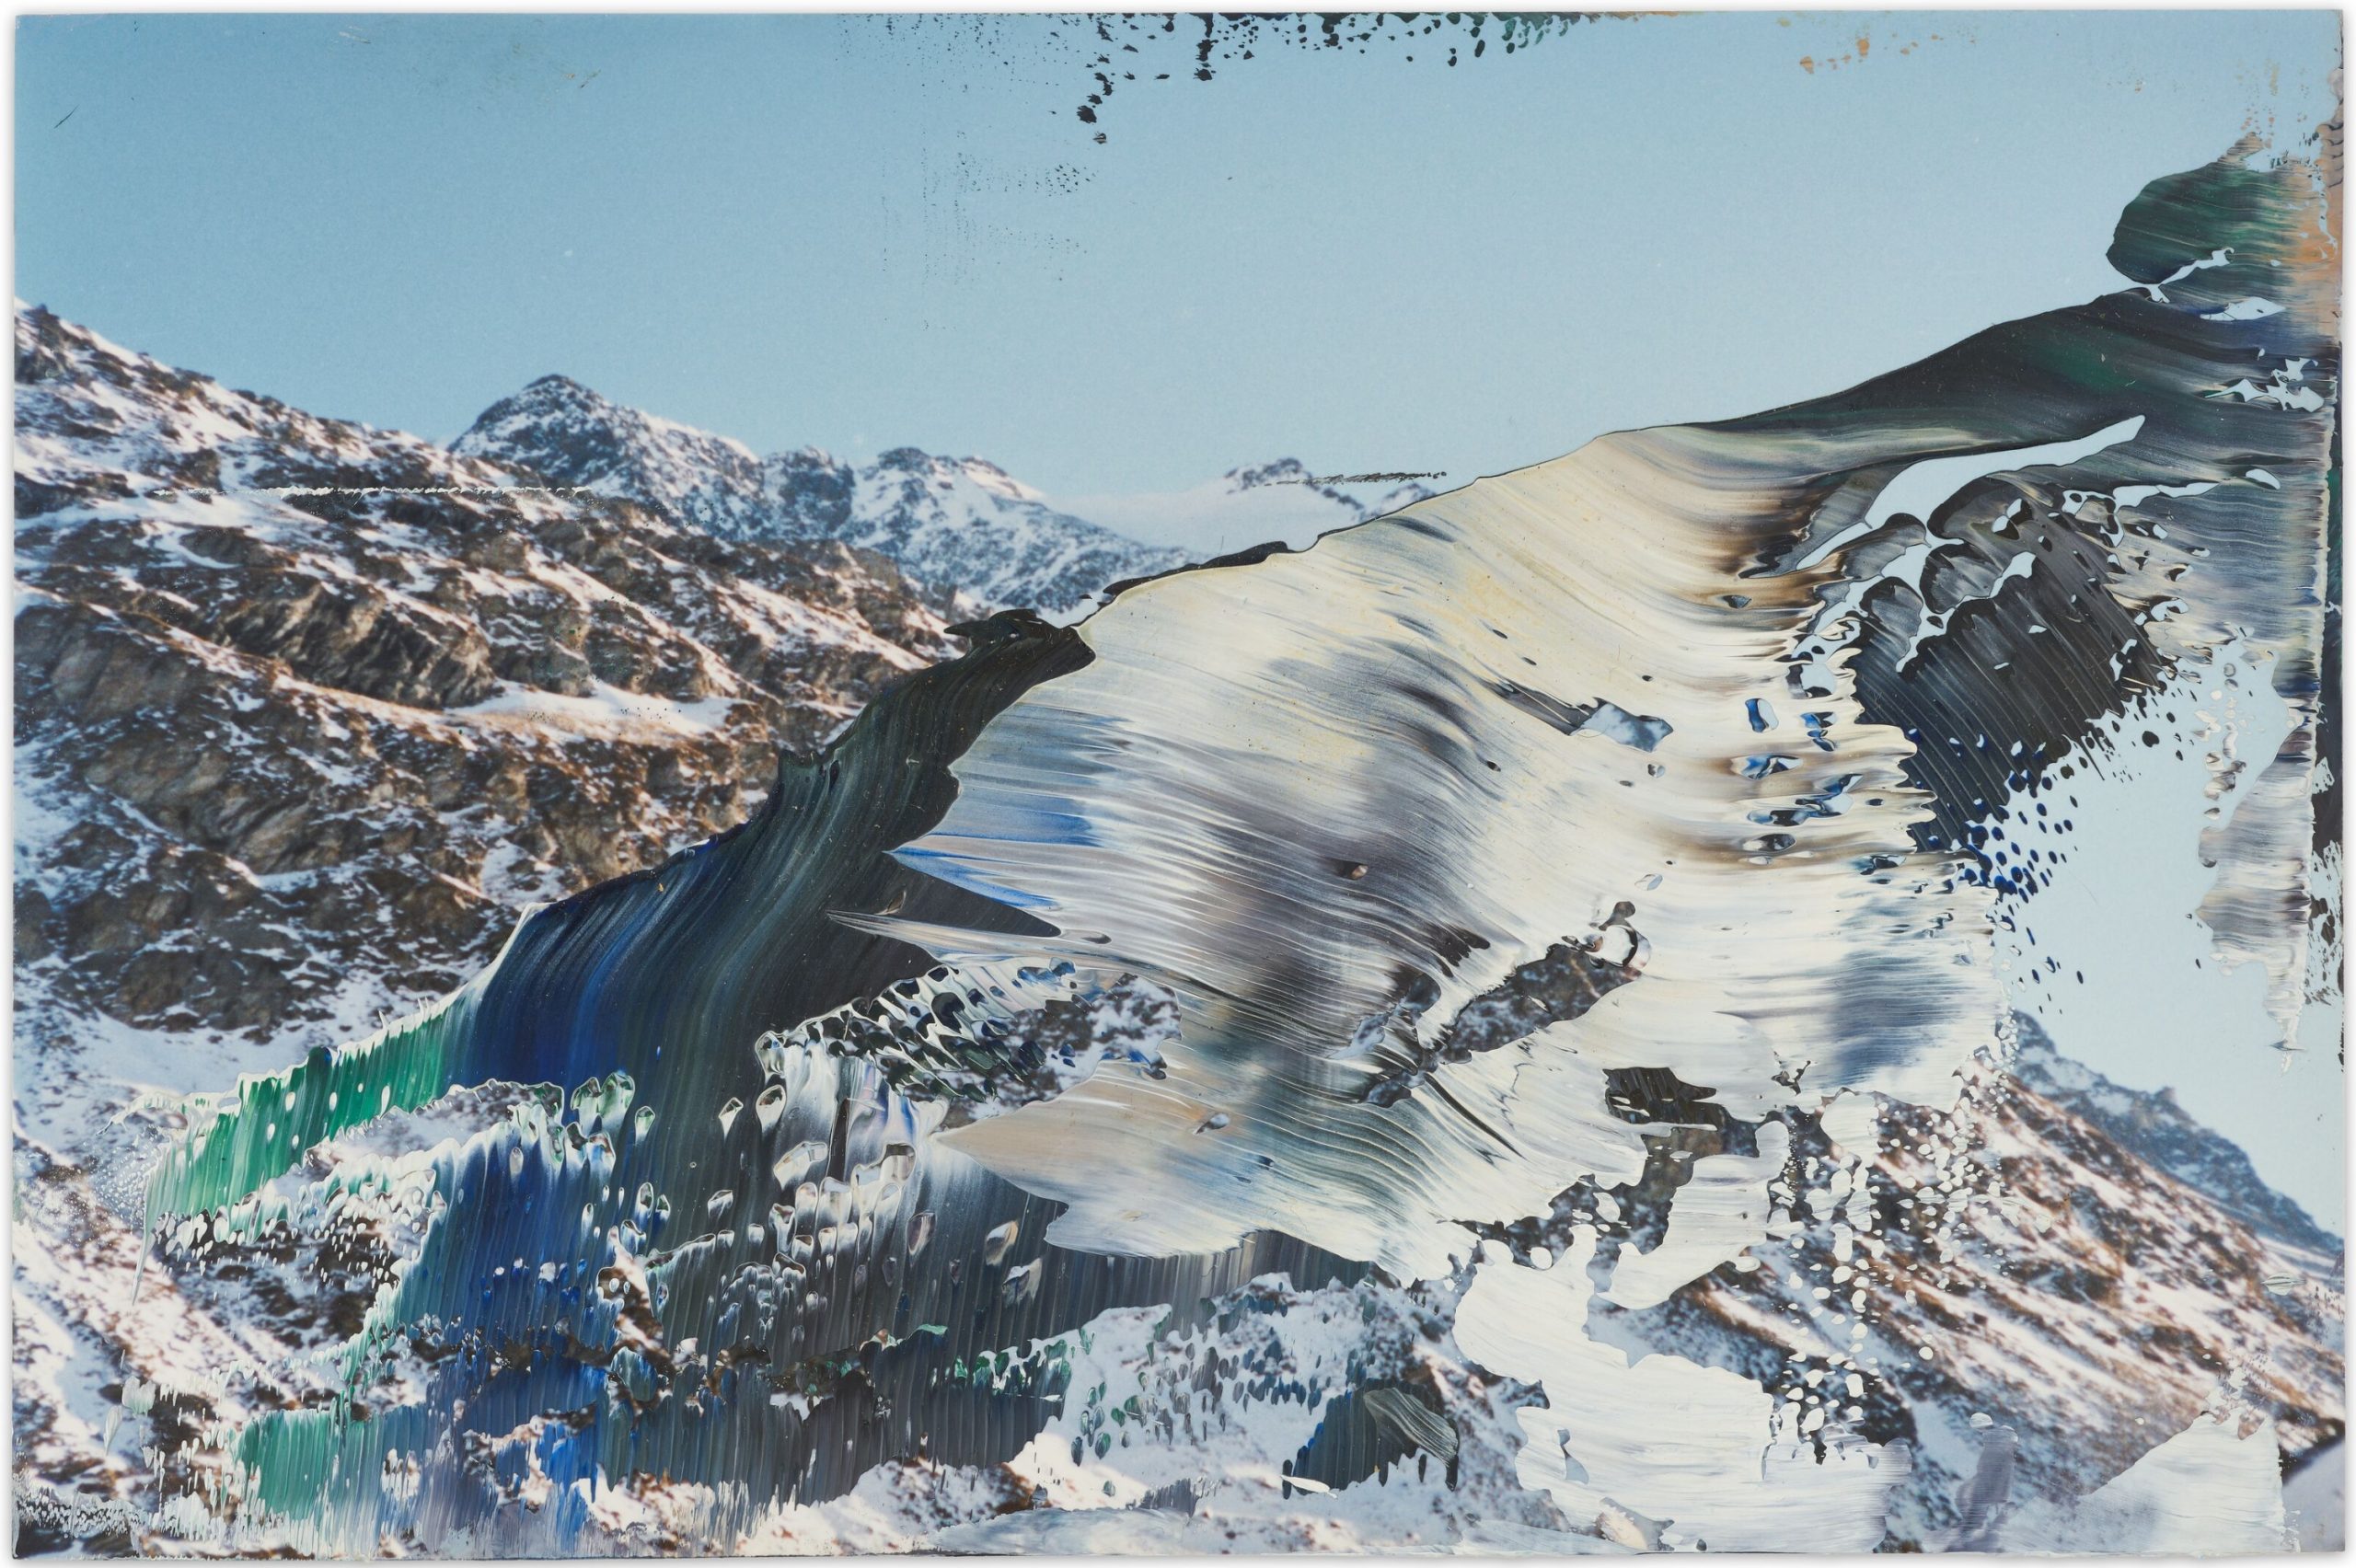 Gerhard Richter Alpine Landscapes: A Tripartite Exhibition in St. Moritz